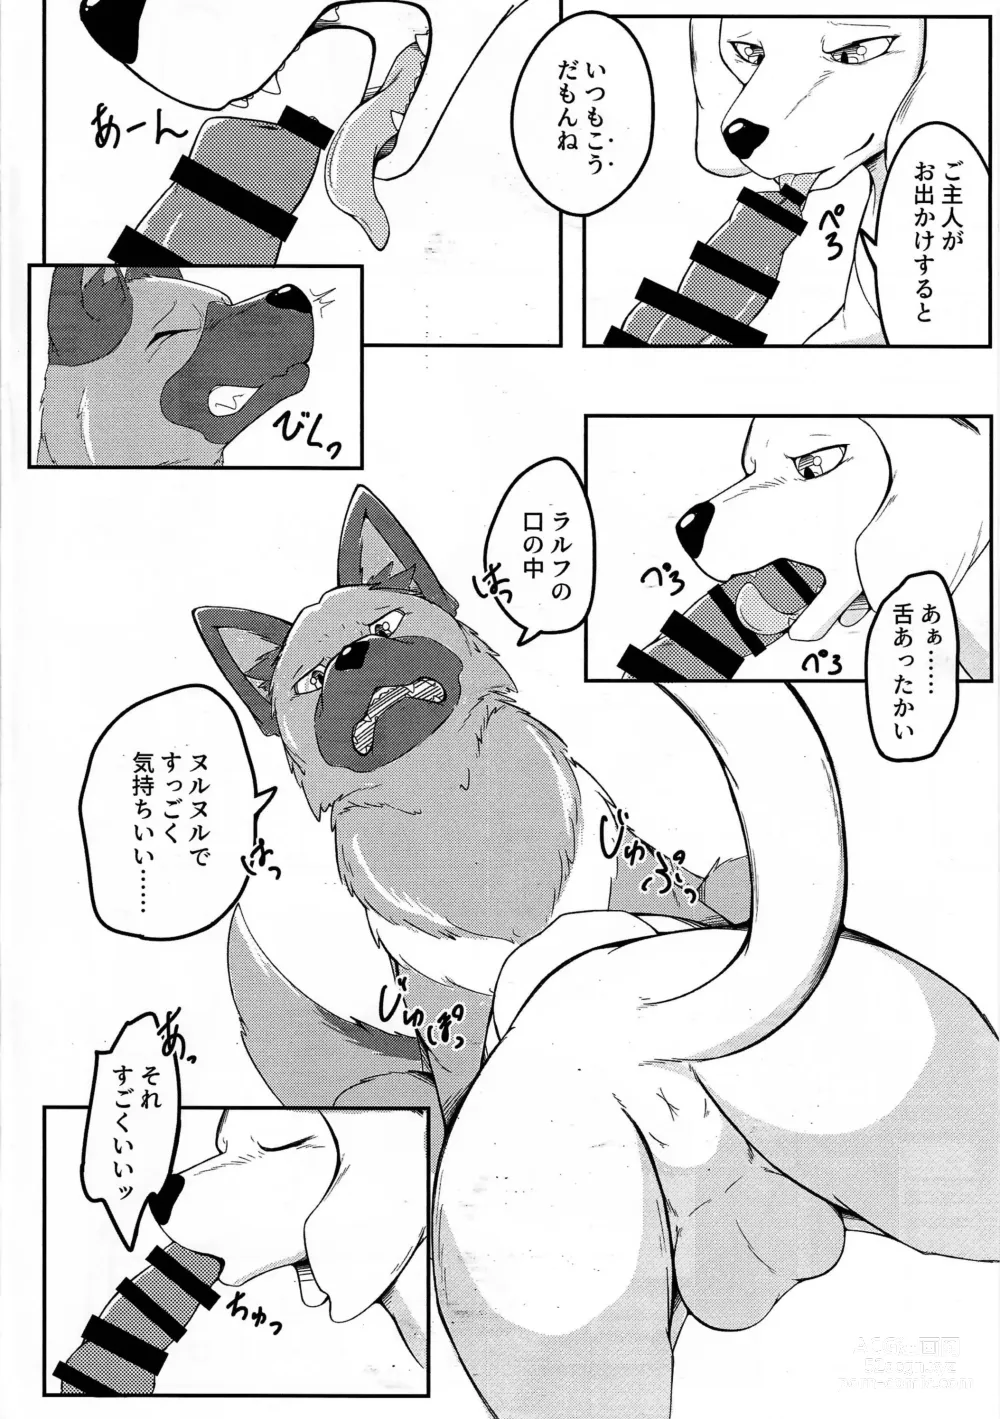 Page 5 of doujinshi Dearest 2